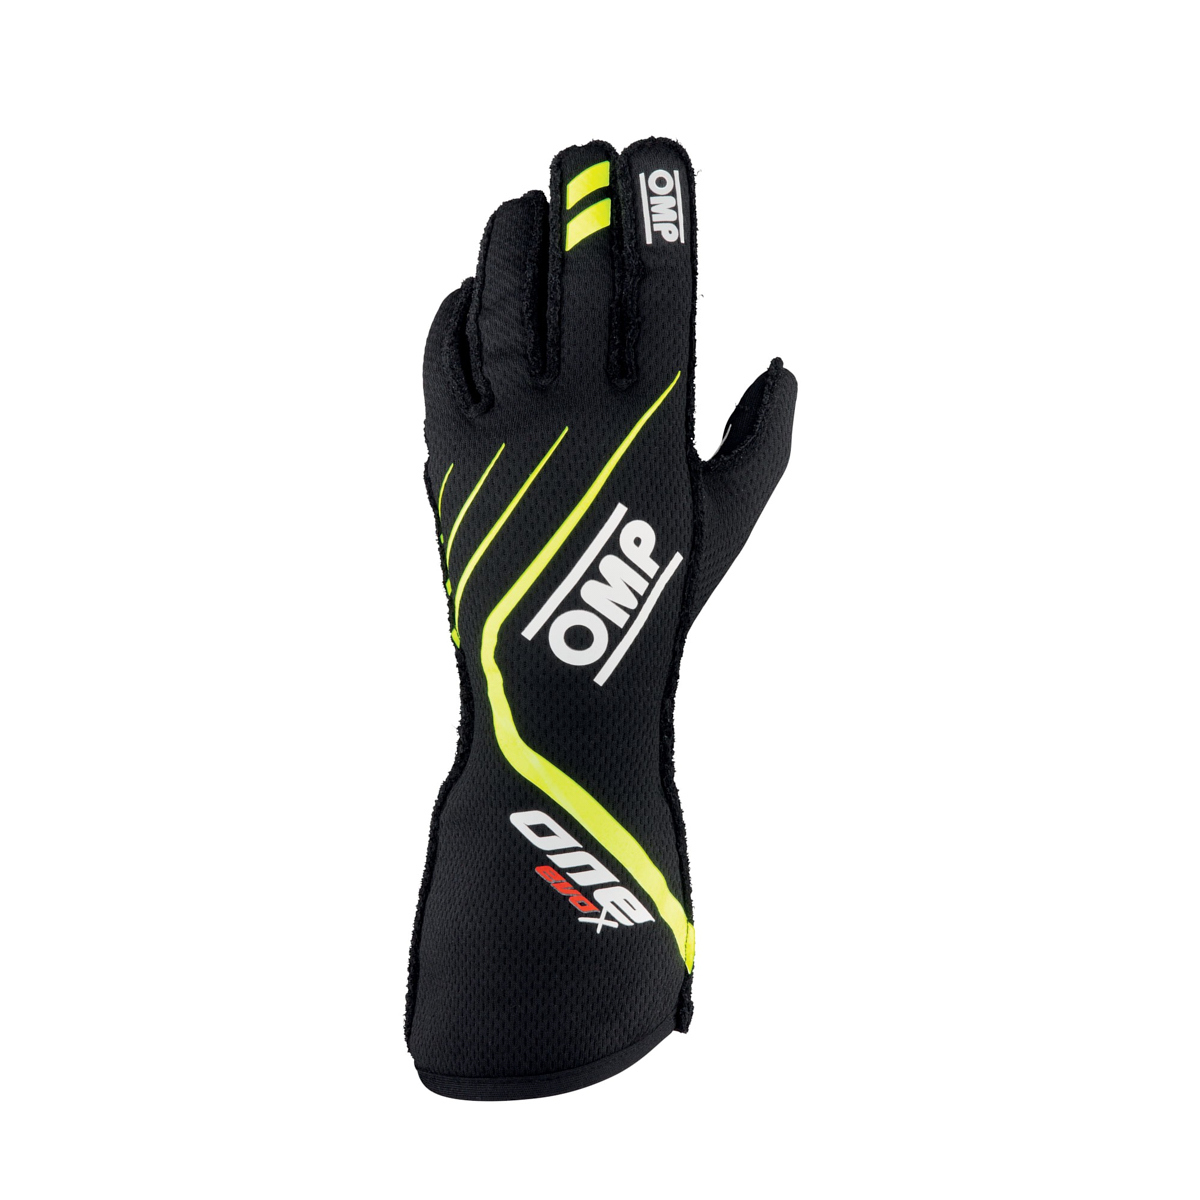 OMP Racing IB771NGIM Driving Gloves, One EVO X, FIA Approved, Double Layer, Fire Retardant Fabric, Black / Fluorescent Yellow, Medium, Pair